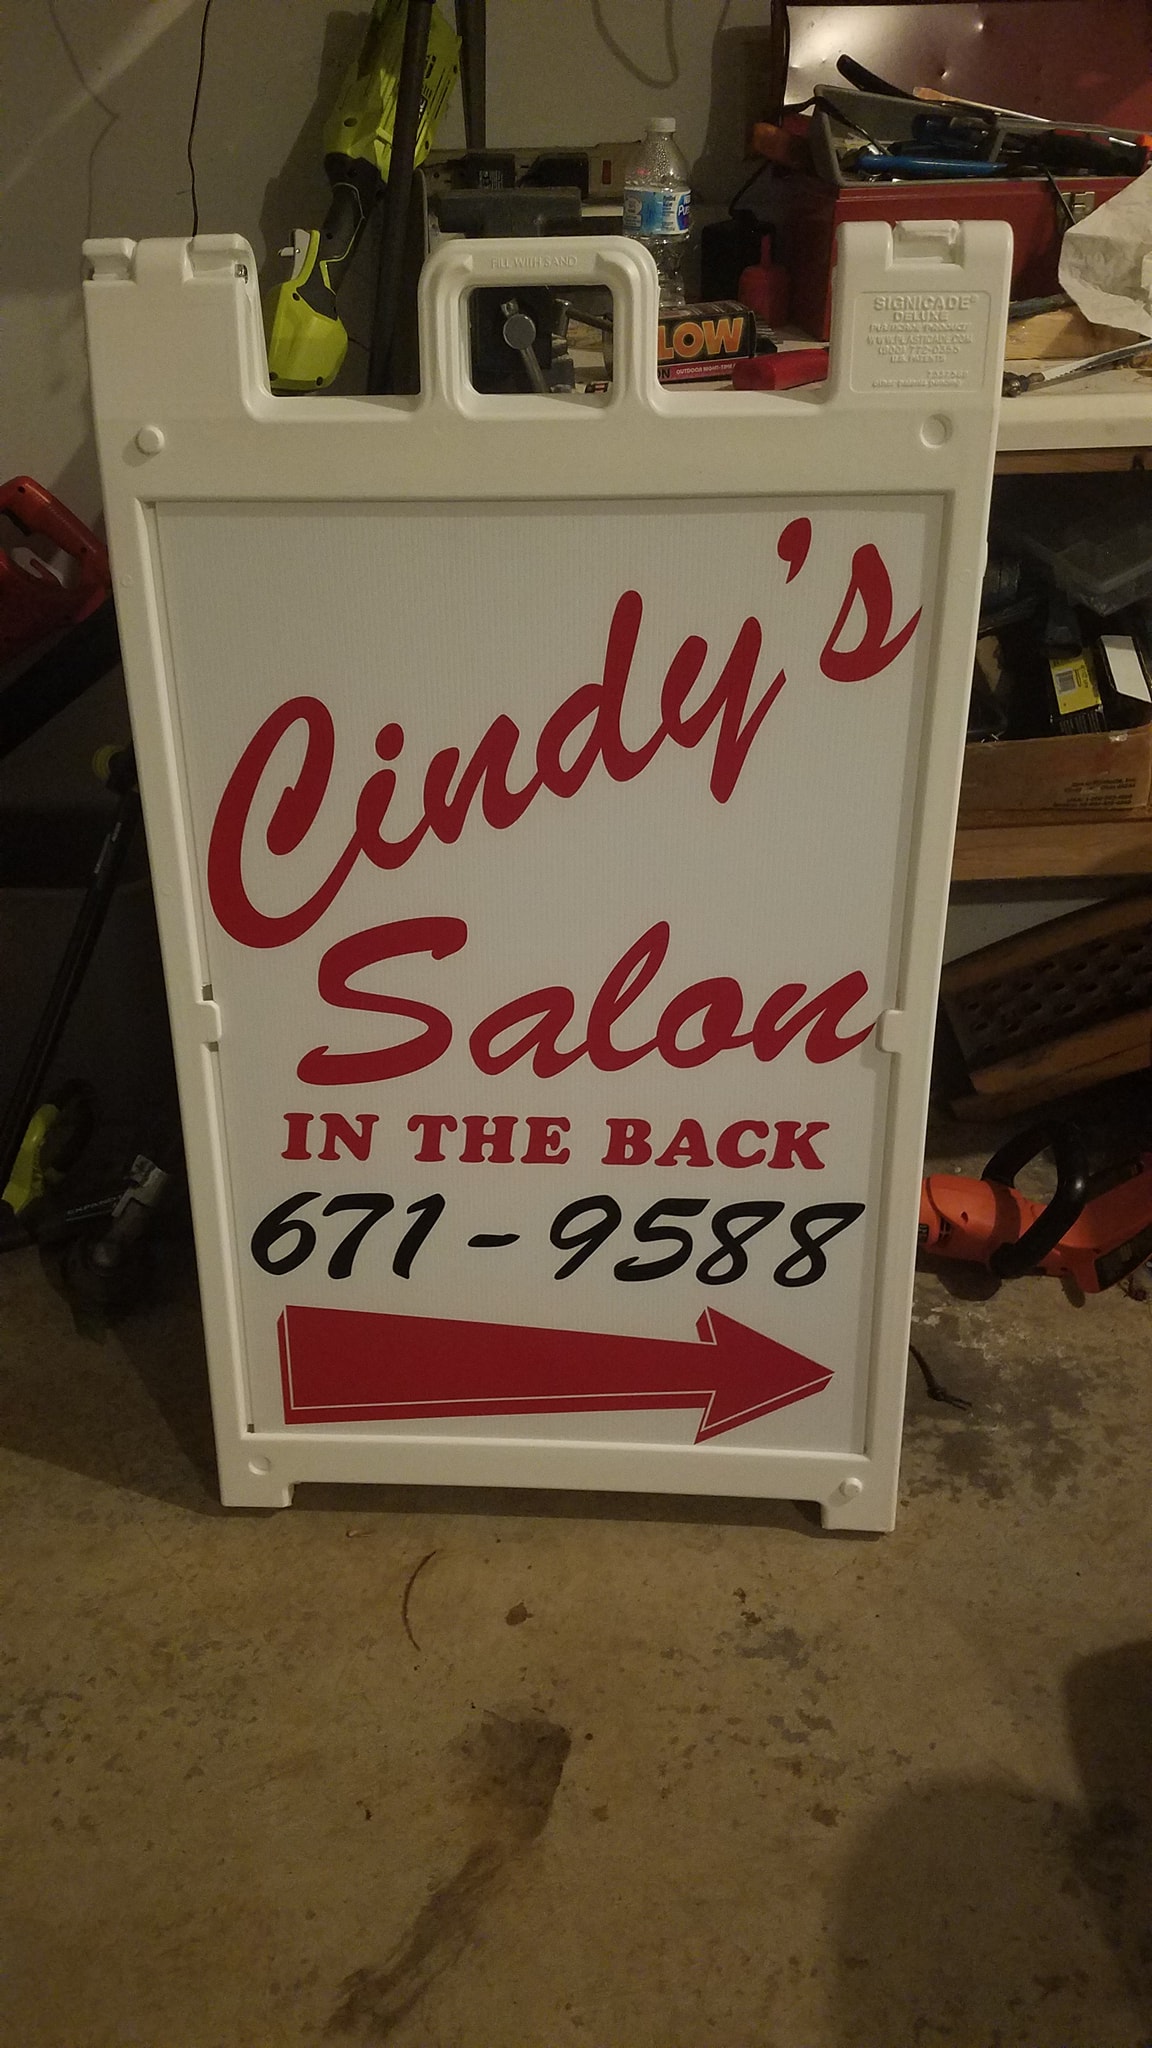 Cindy's Salon